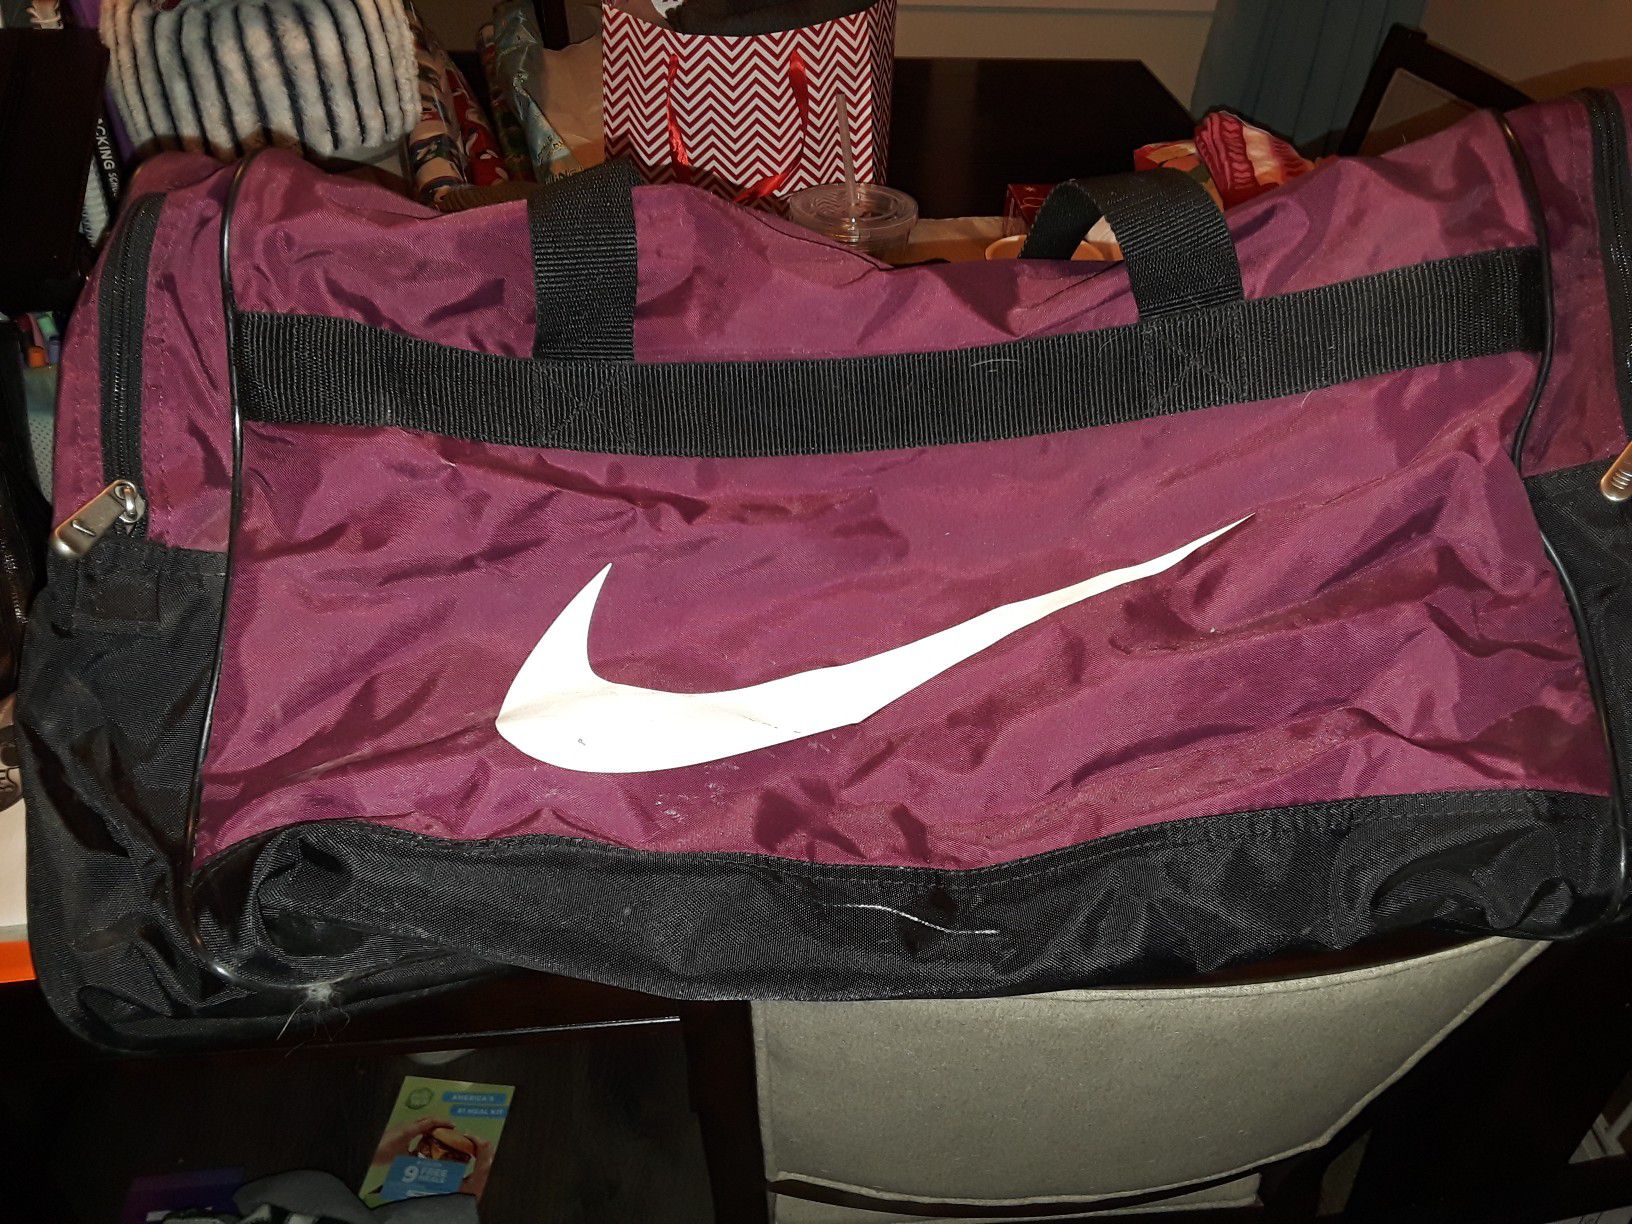 Large Nike duffle bag